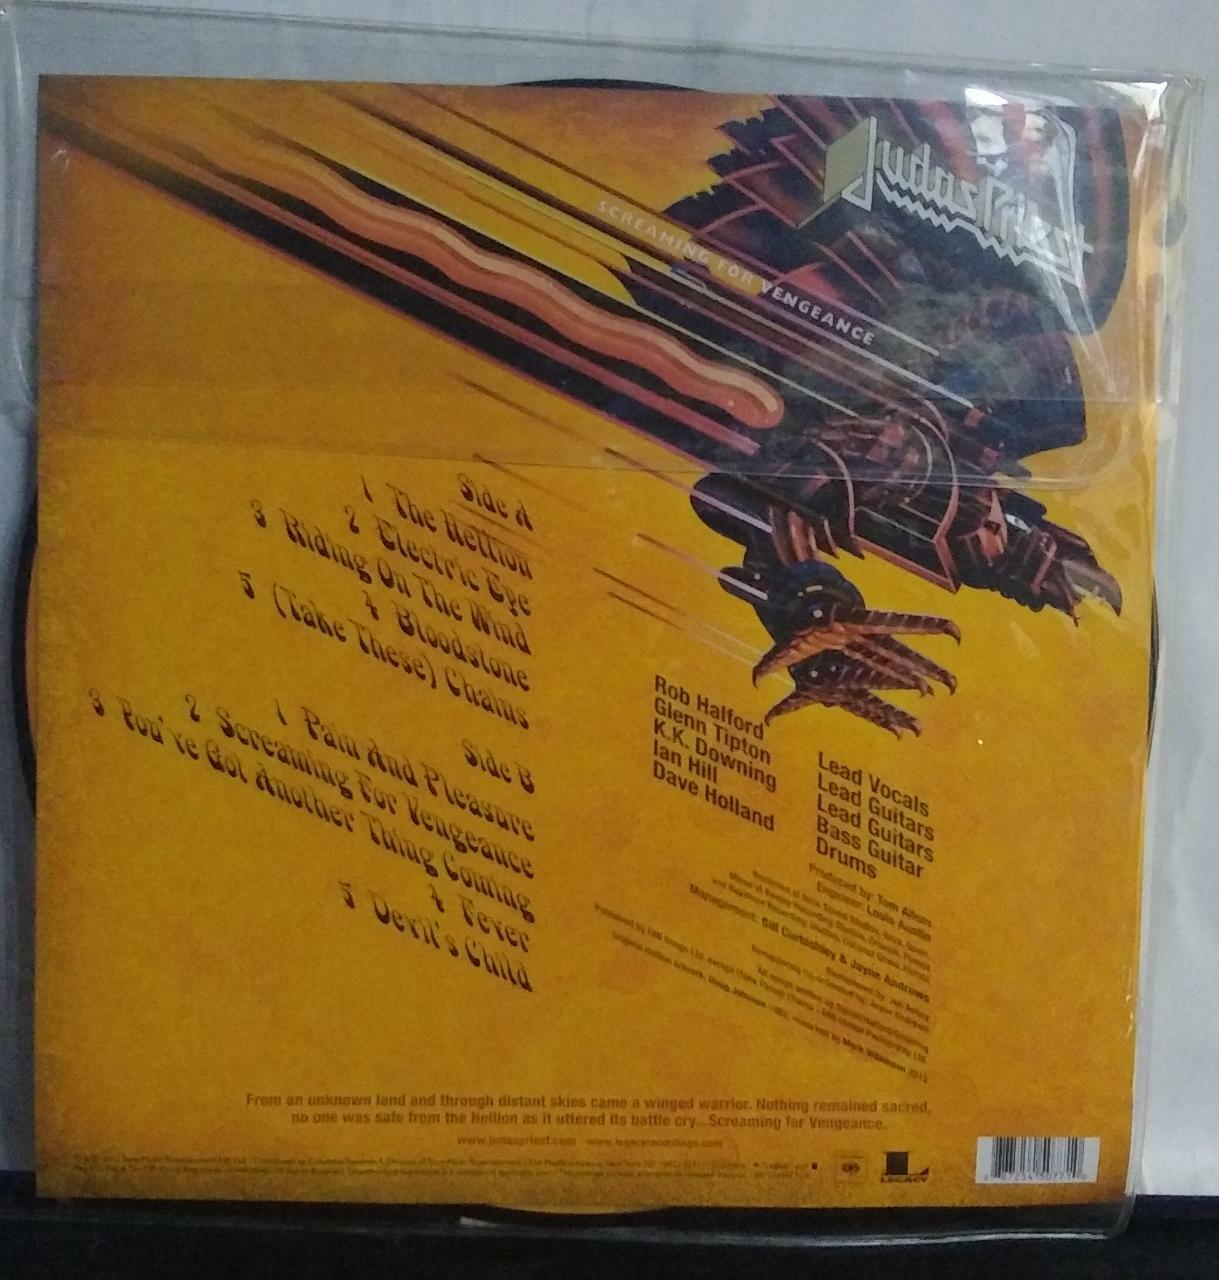 Vinil - Judas Priest - Screaming for Vengeance (Picture/USA)